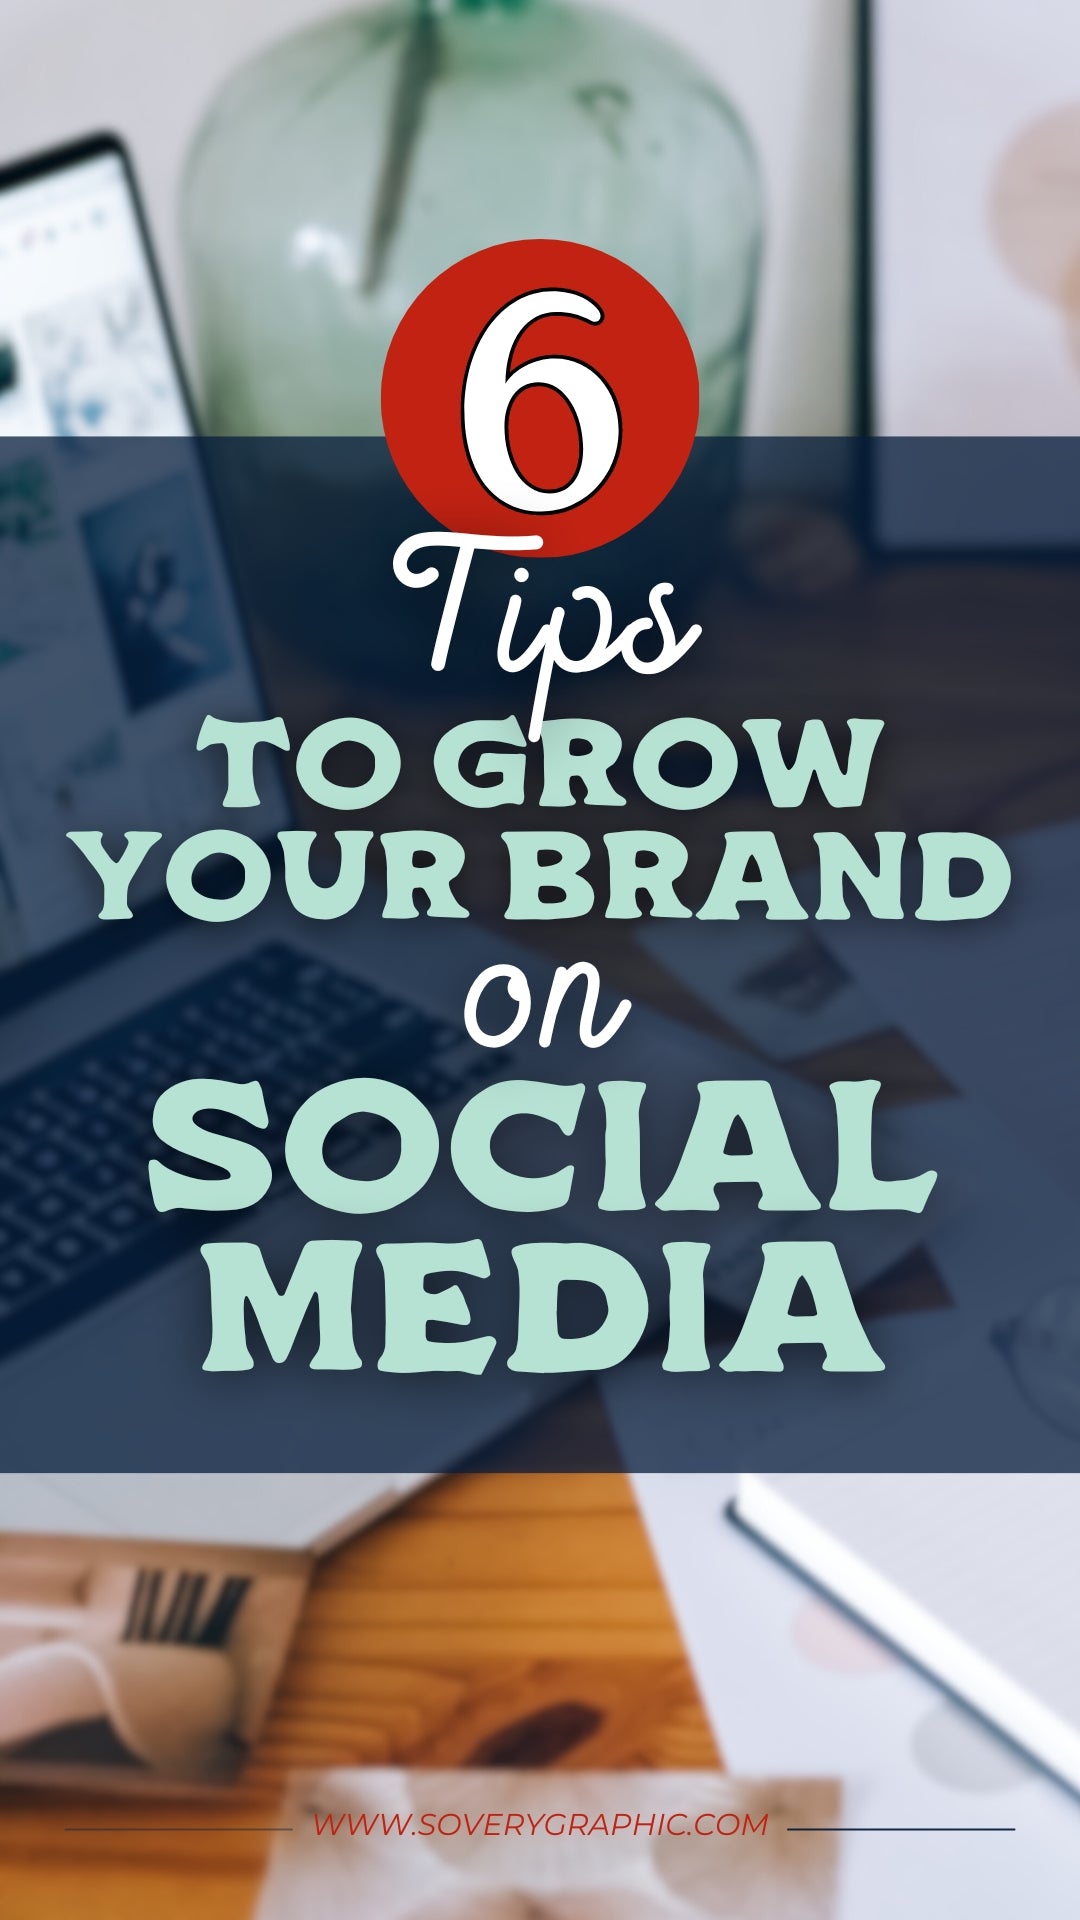 6 Tips to Grow Your Brand on Social Media